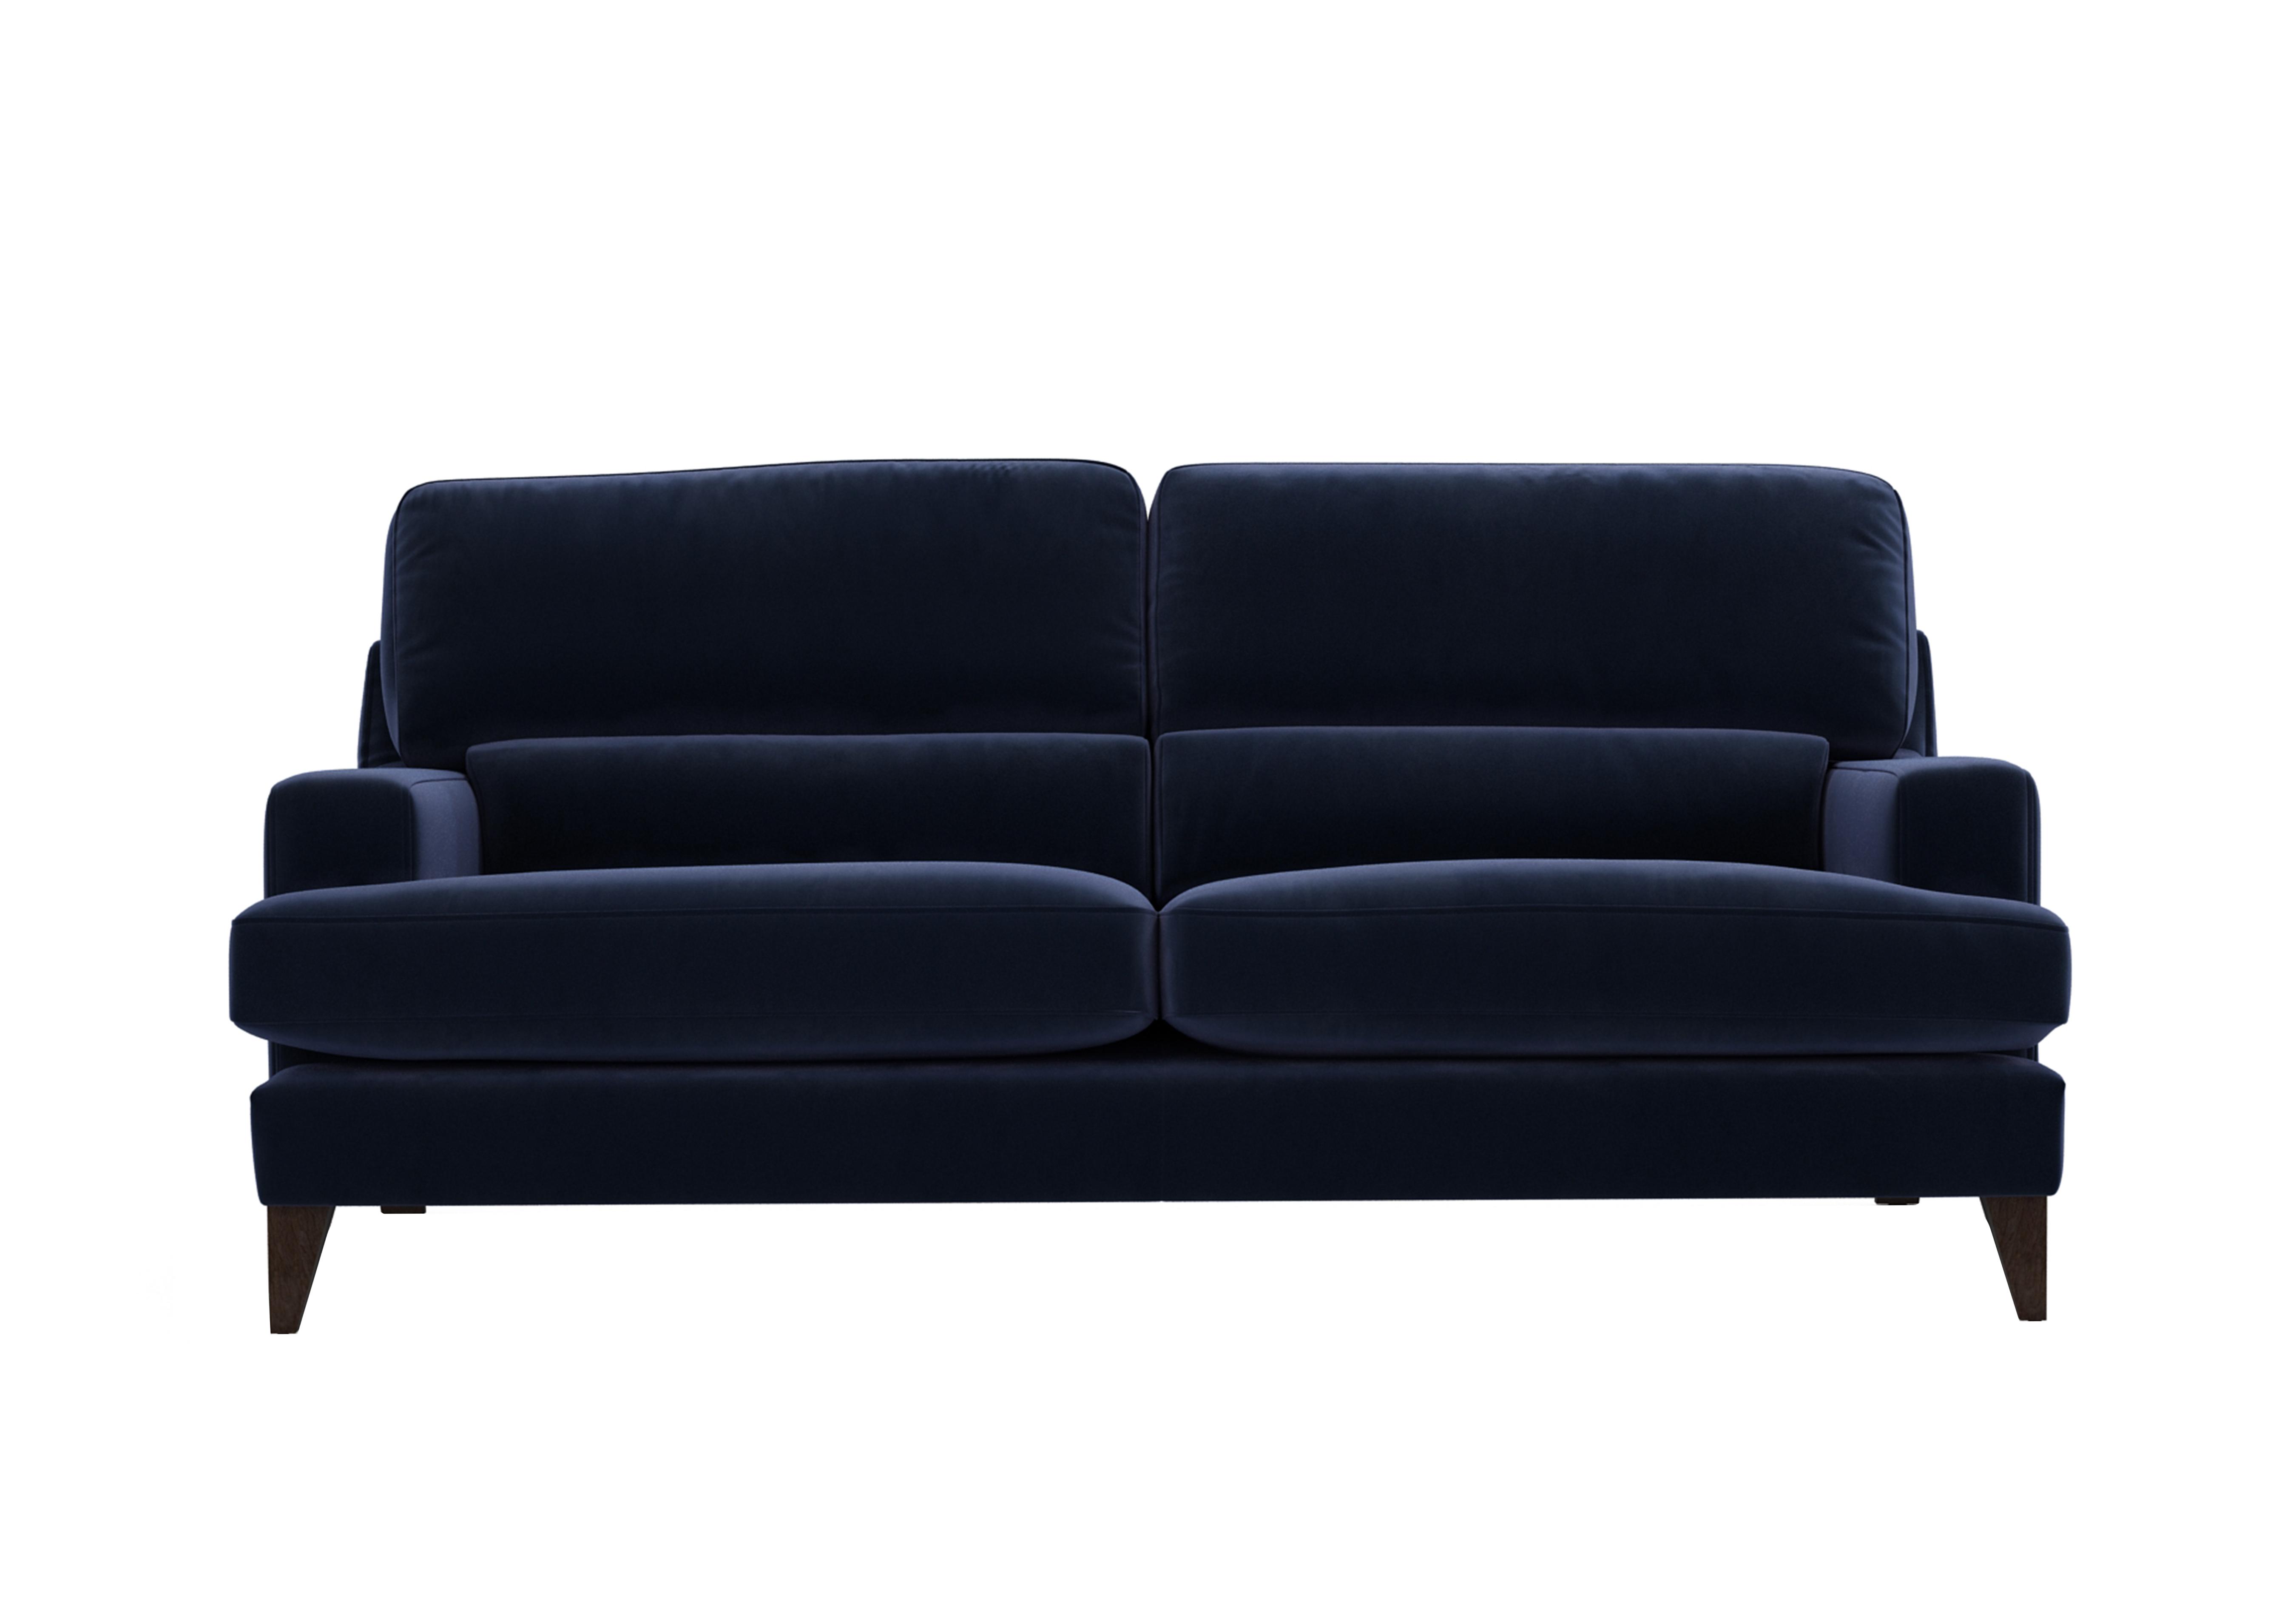 Romilly 3 Seater Fabric Sofa in Mid009 Midnight Indigo Wa Ft on Furniture Village